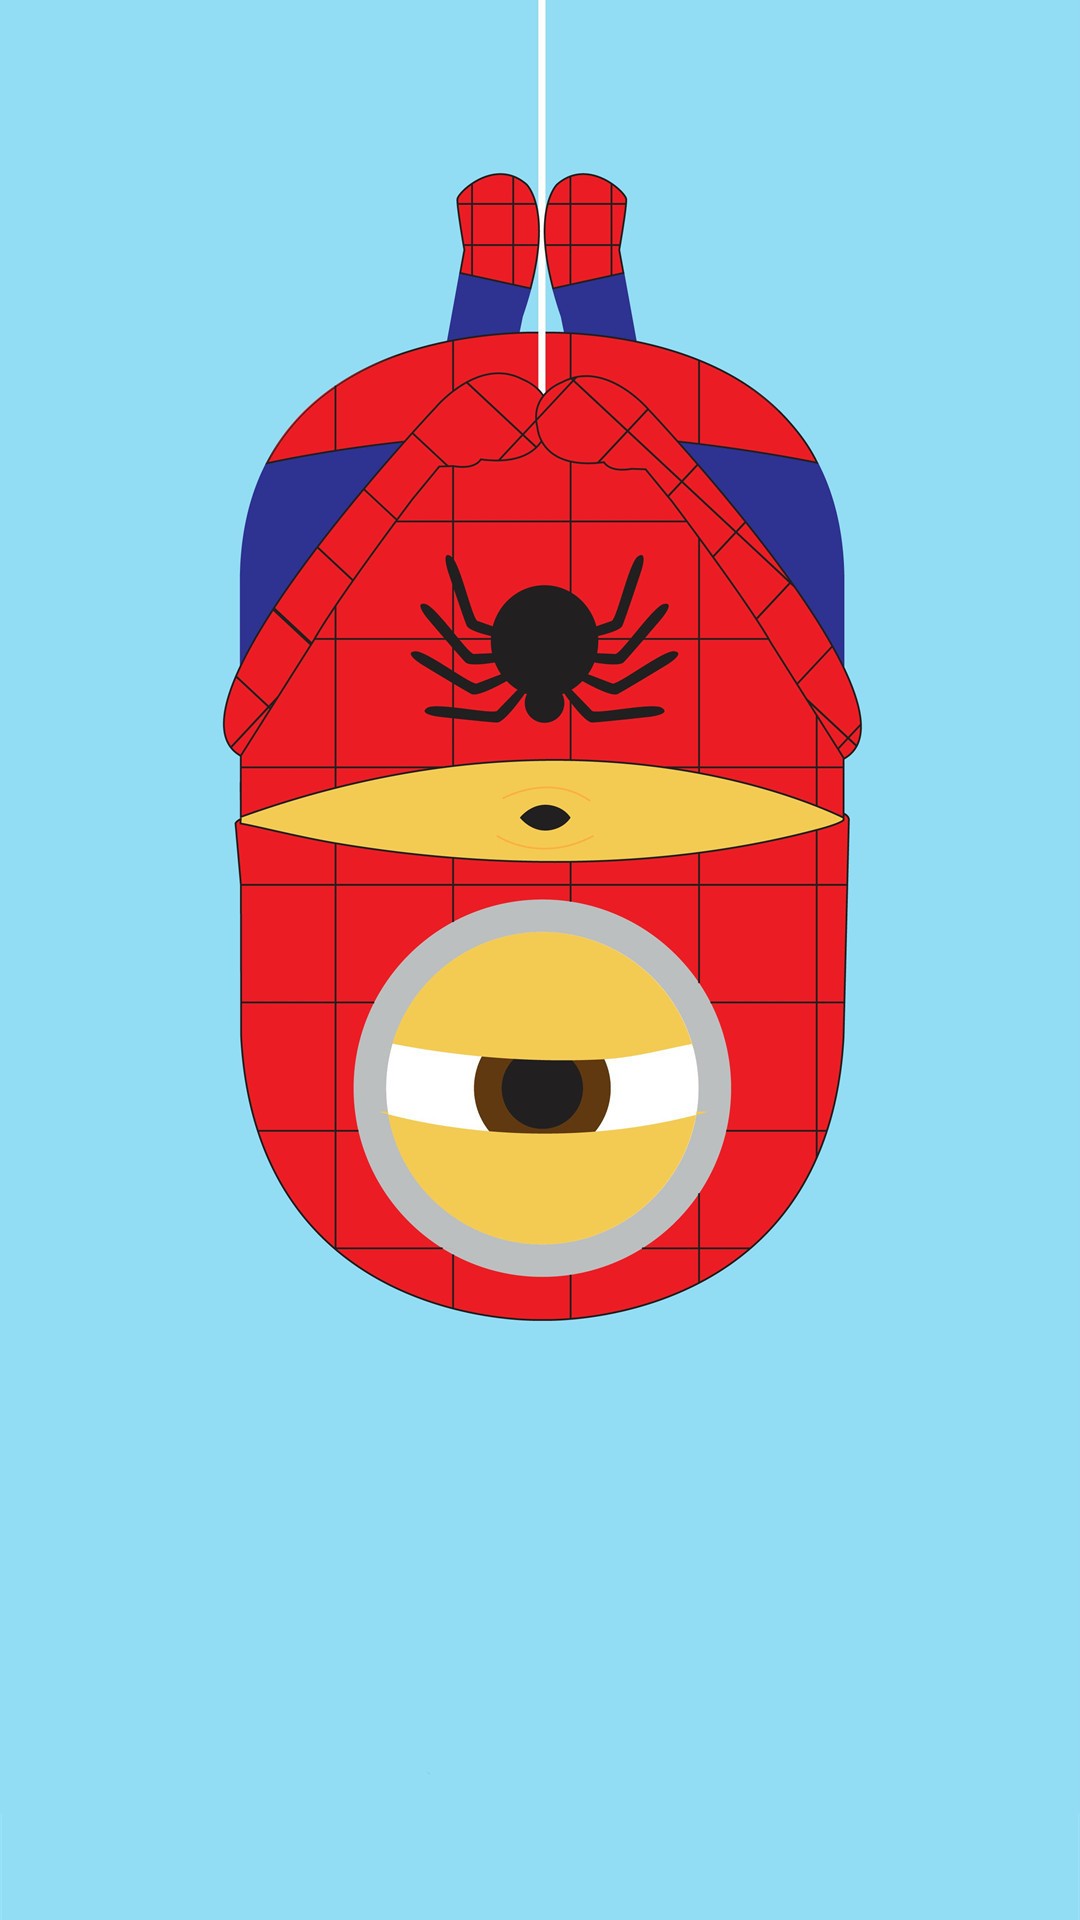 Wallpaper Weekends: Minions Marvel Superheroes - iPhone